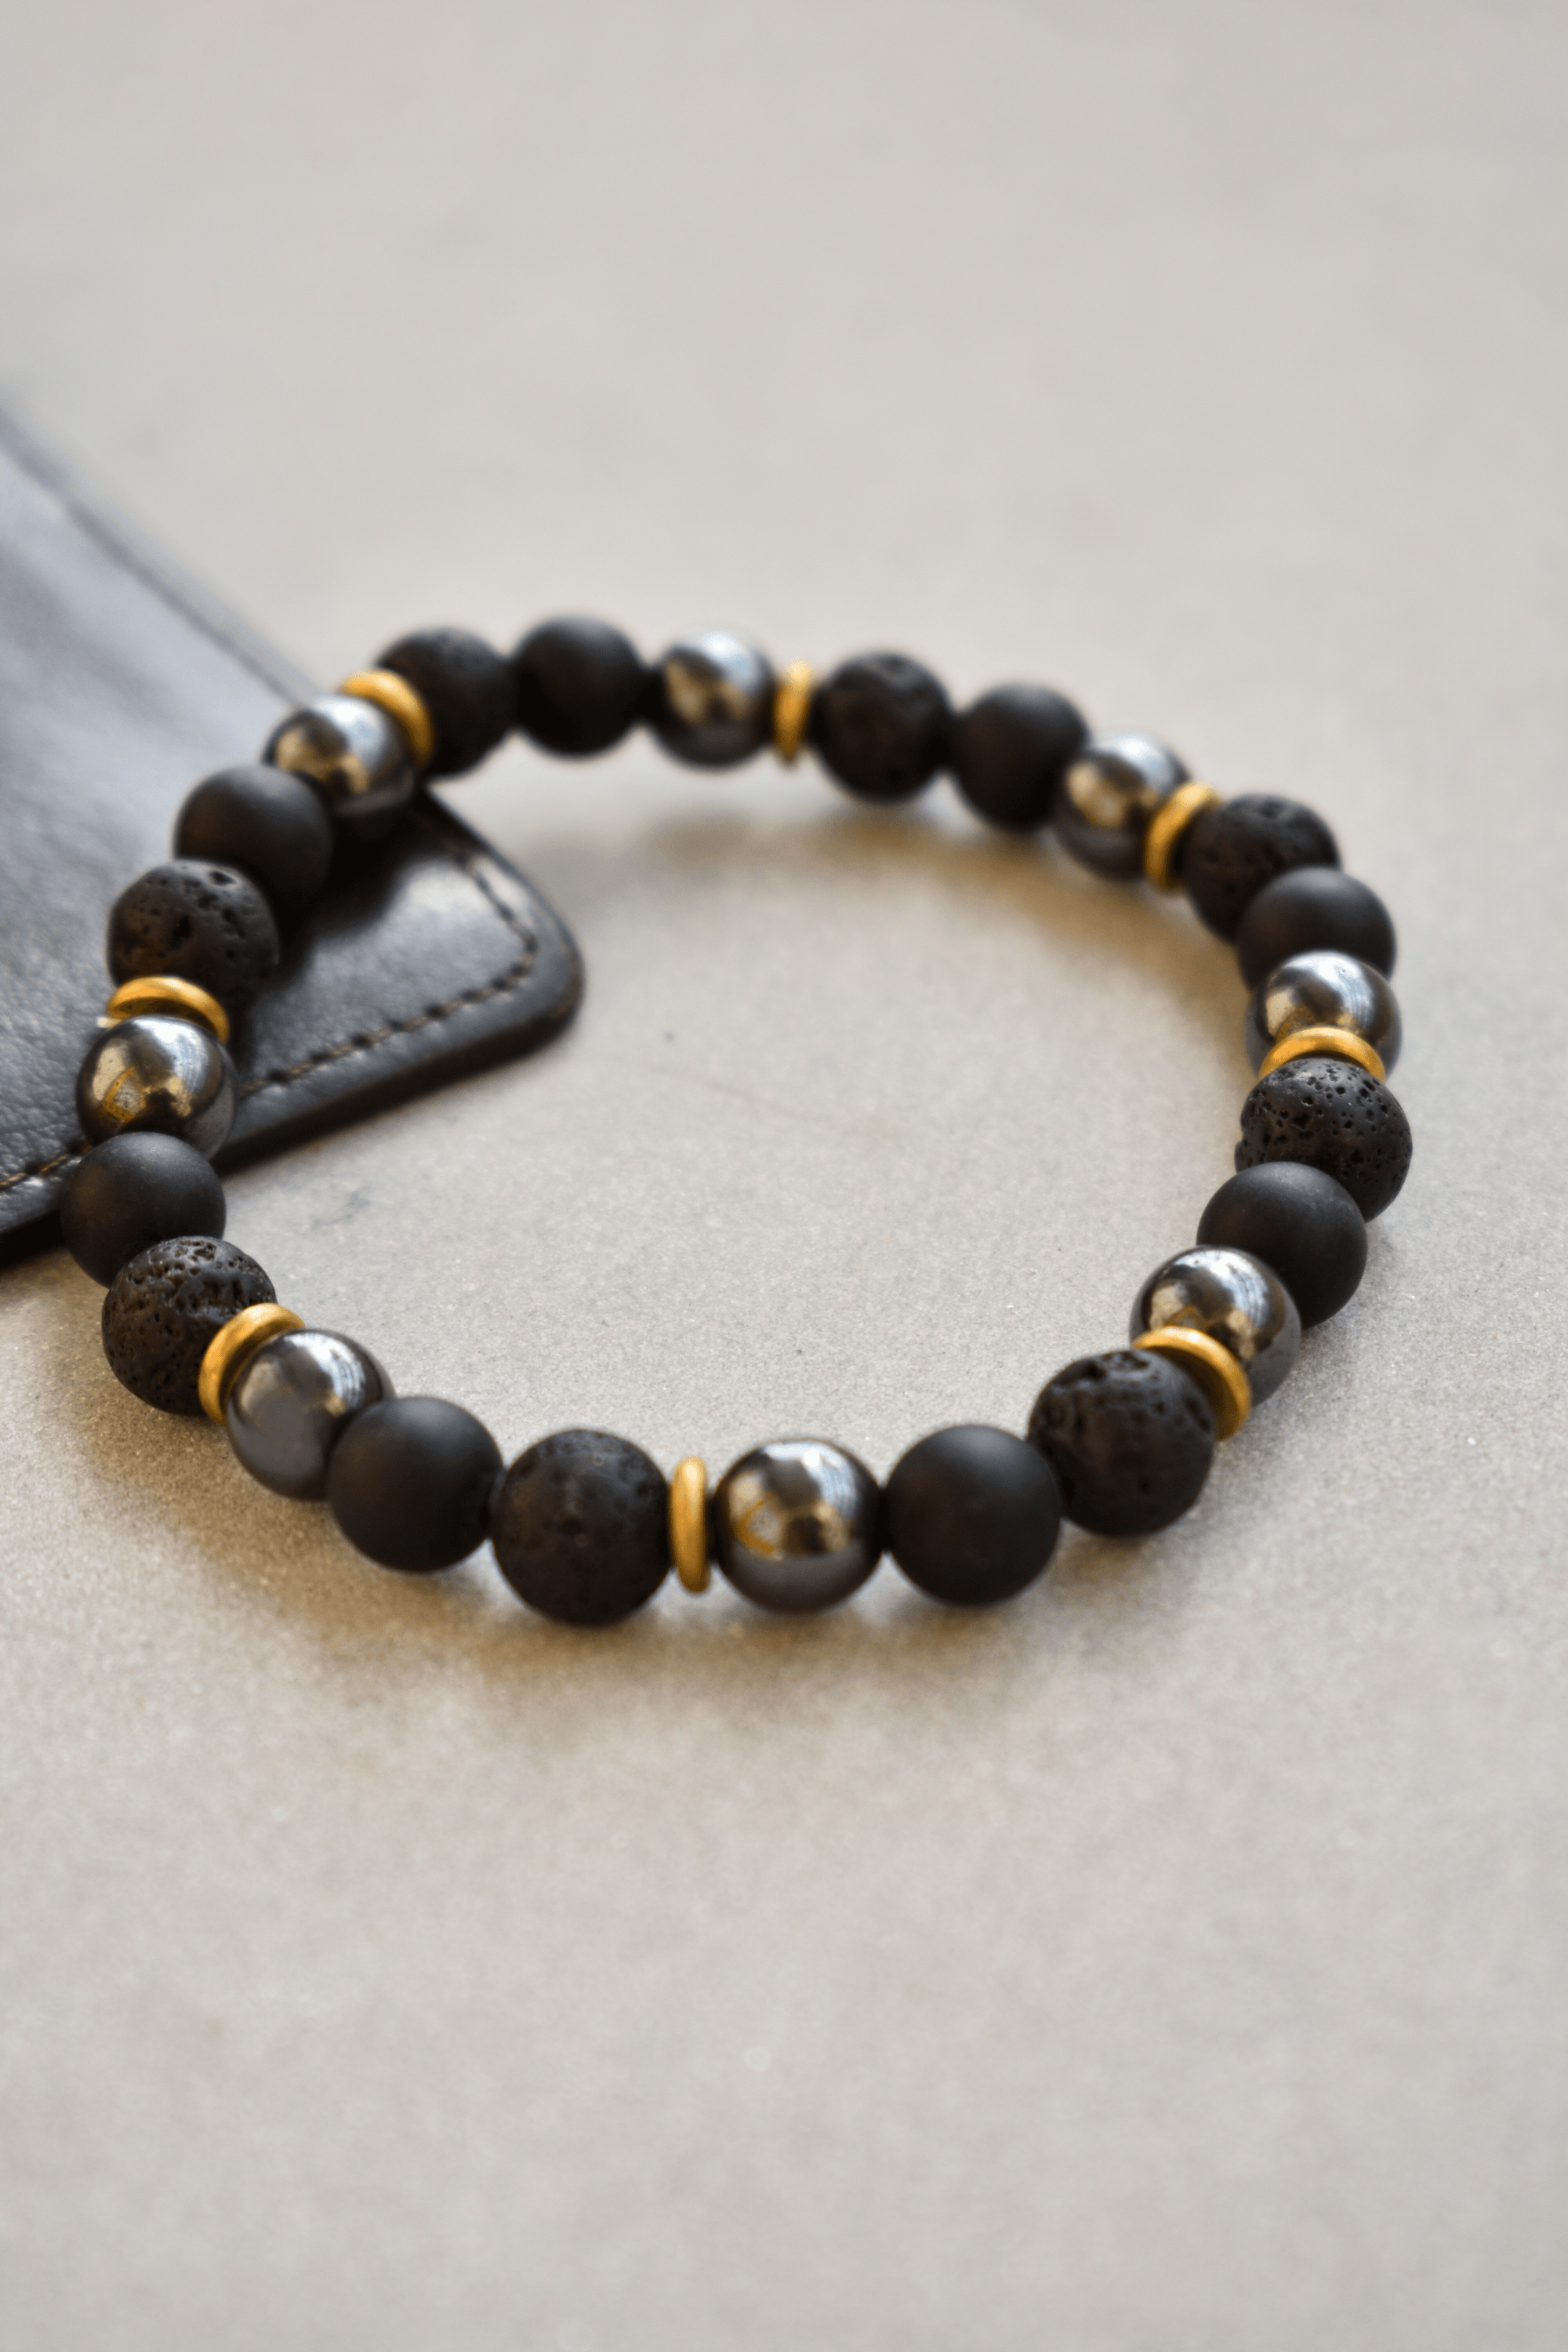 Black Onyx Hematite Volcanic Lava Brass Stretchable Beads Bracelet 7" For Men's Jewelry - YoTreasure